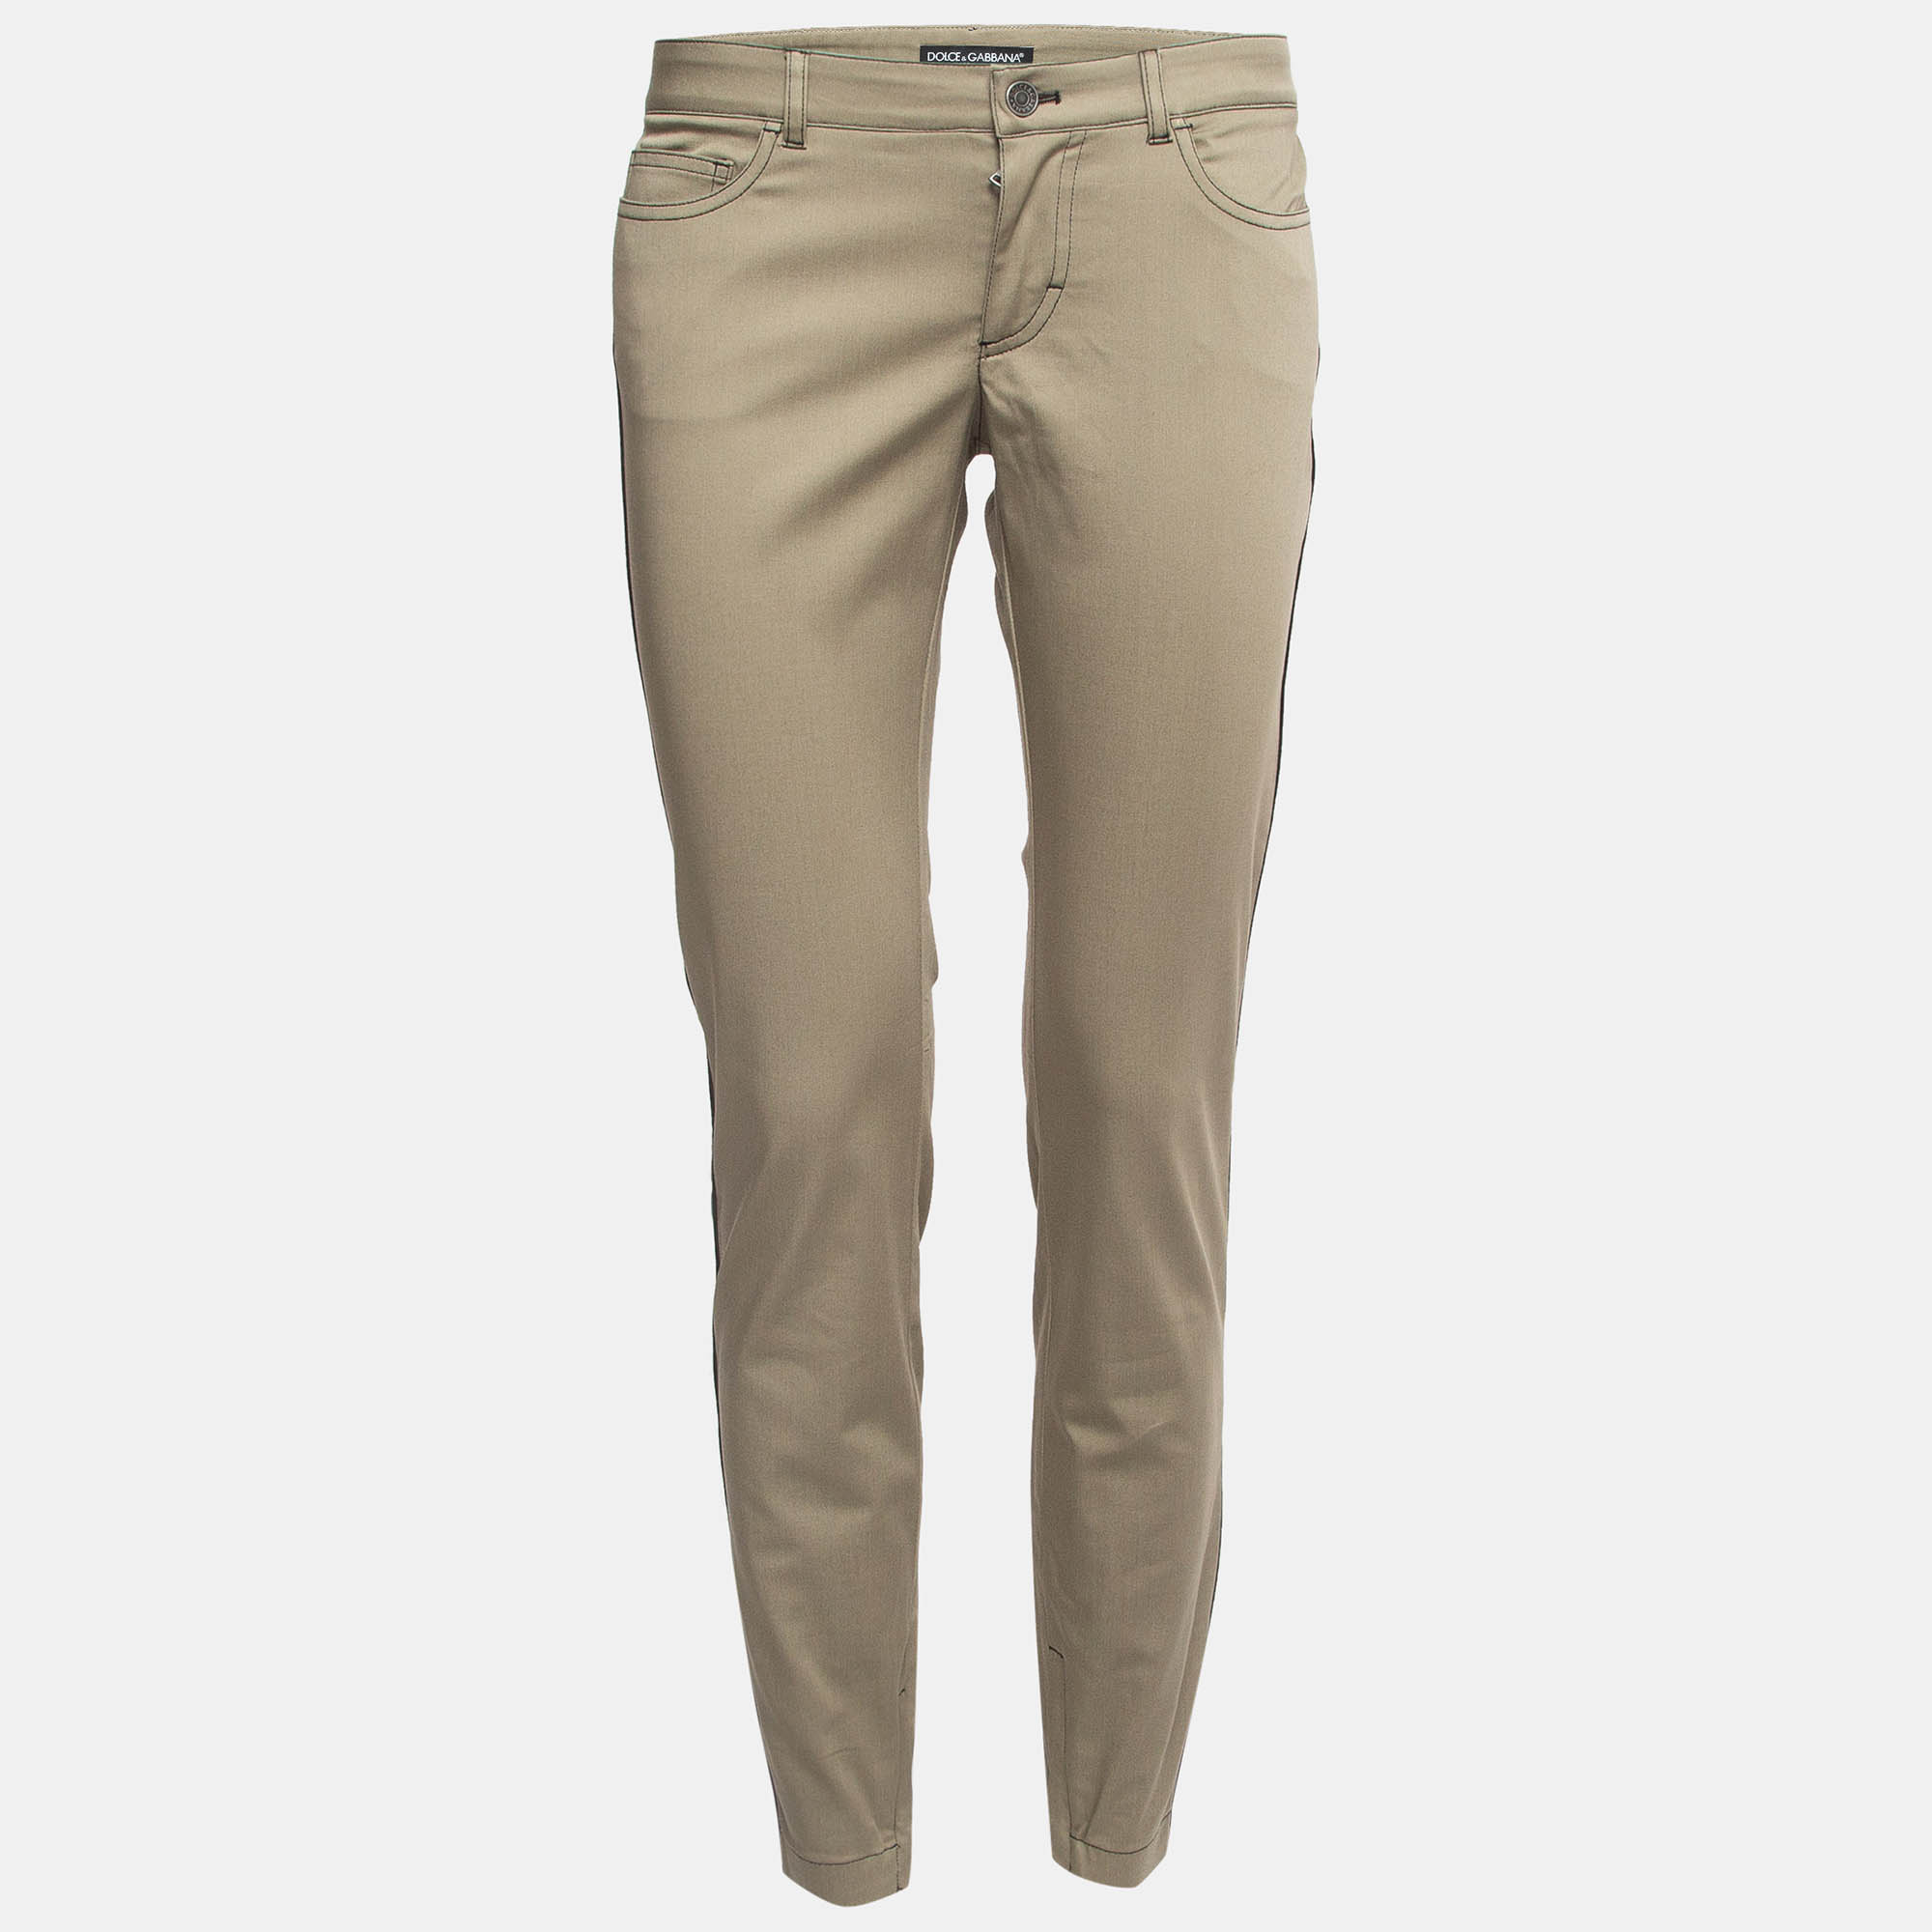 Dolce & gabbana green contrast side trim cotton slim trousers m